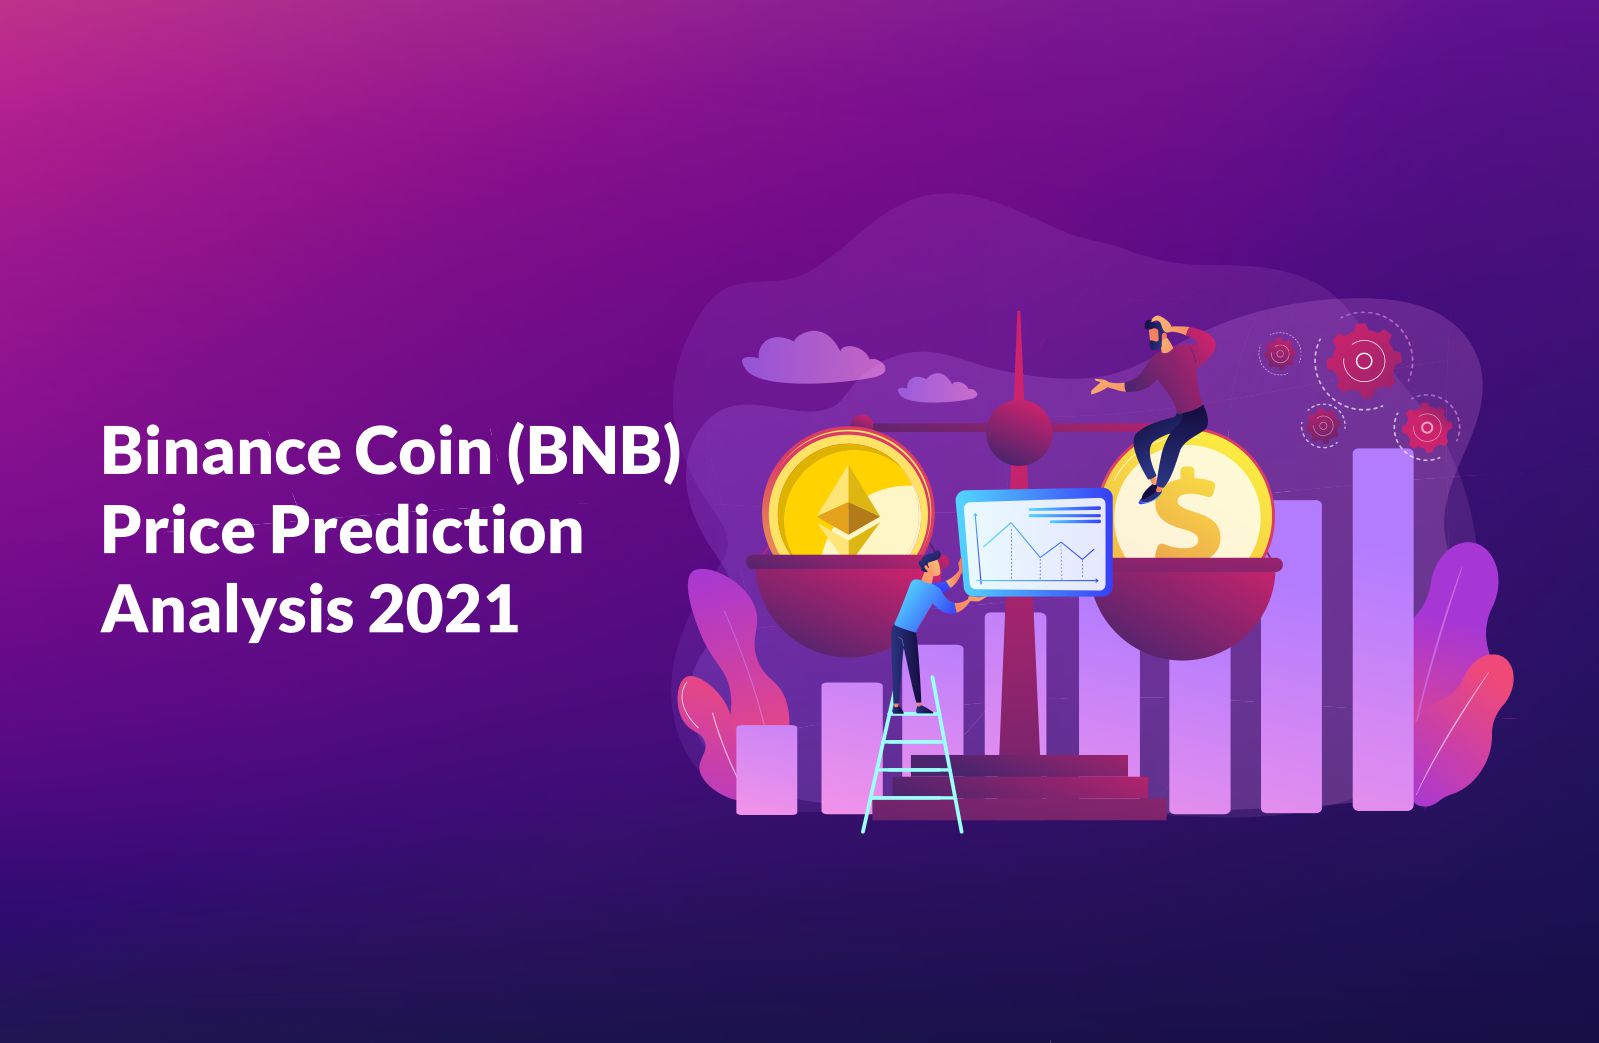 BNB Price Prediction 2021